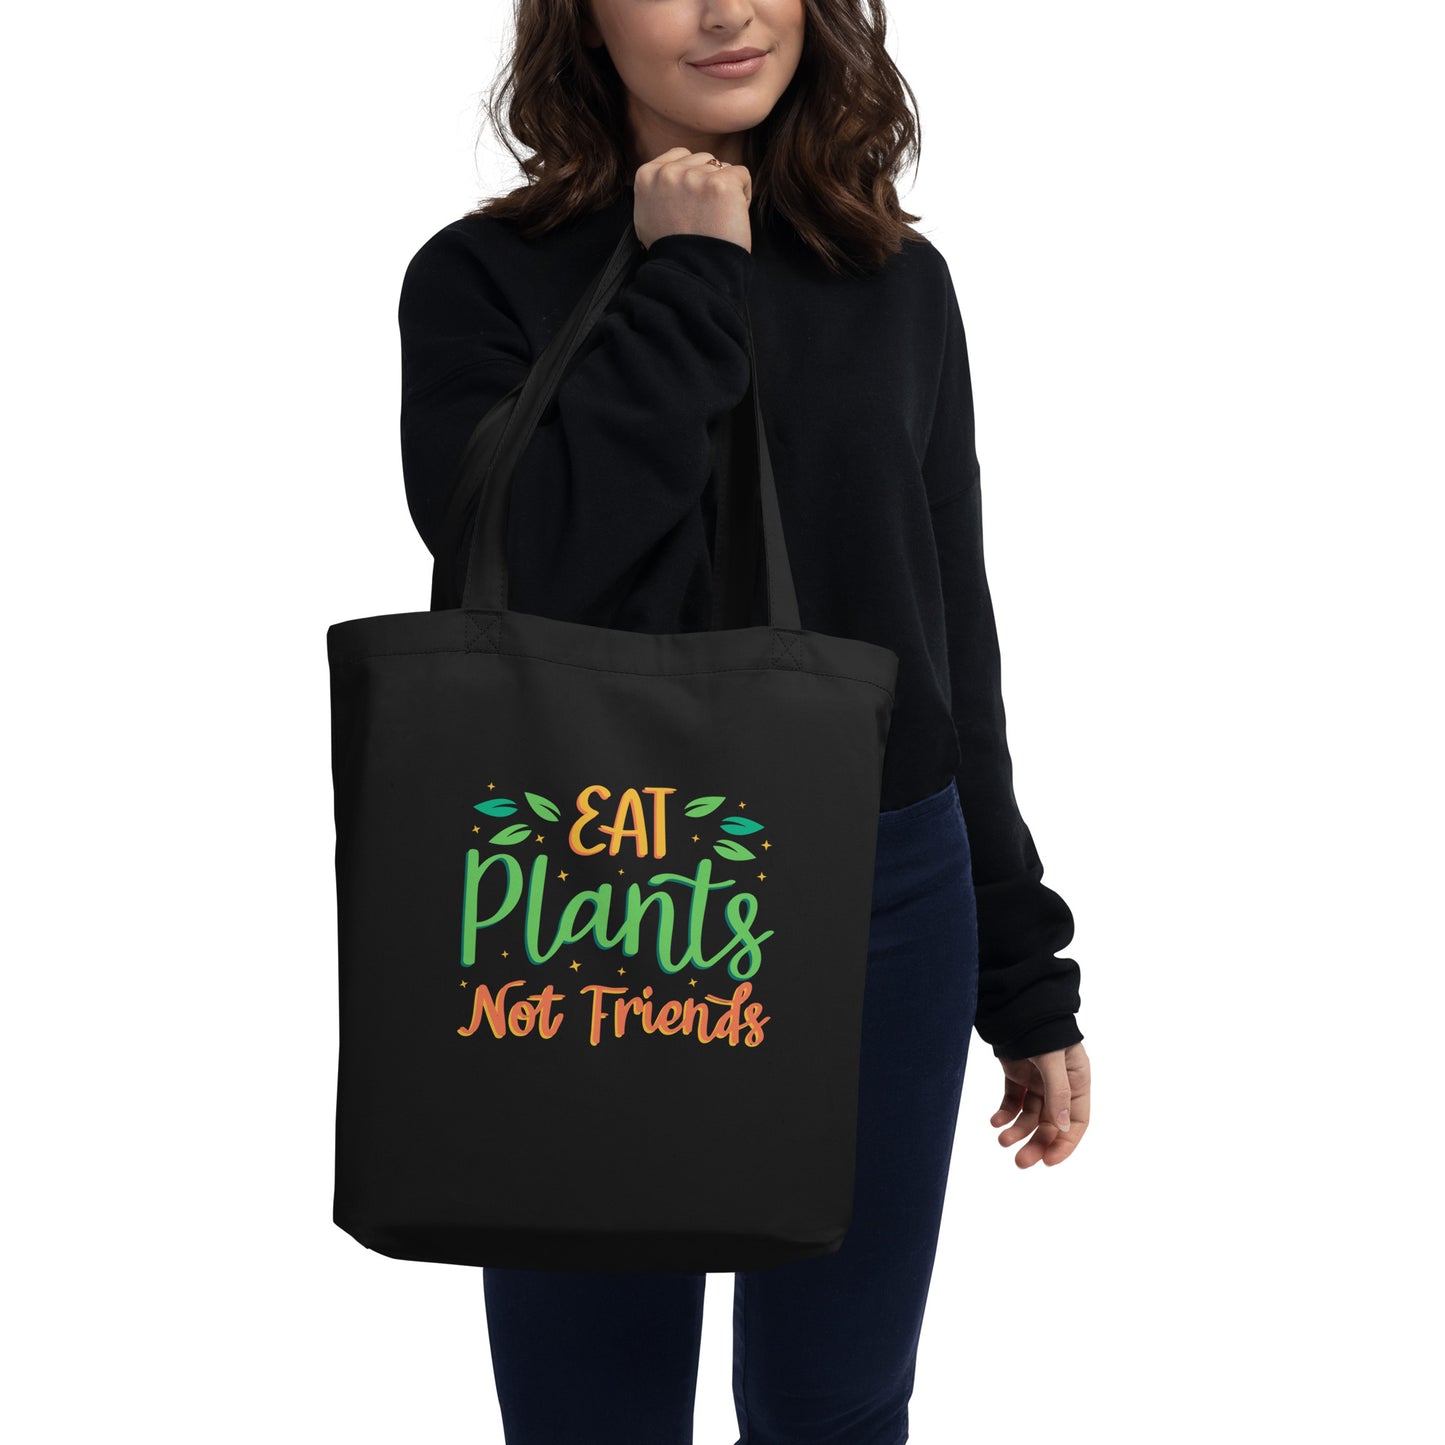 Eat Plants Not Friends - Eco Tote Bag